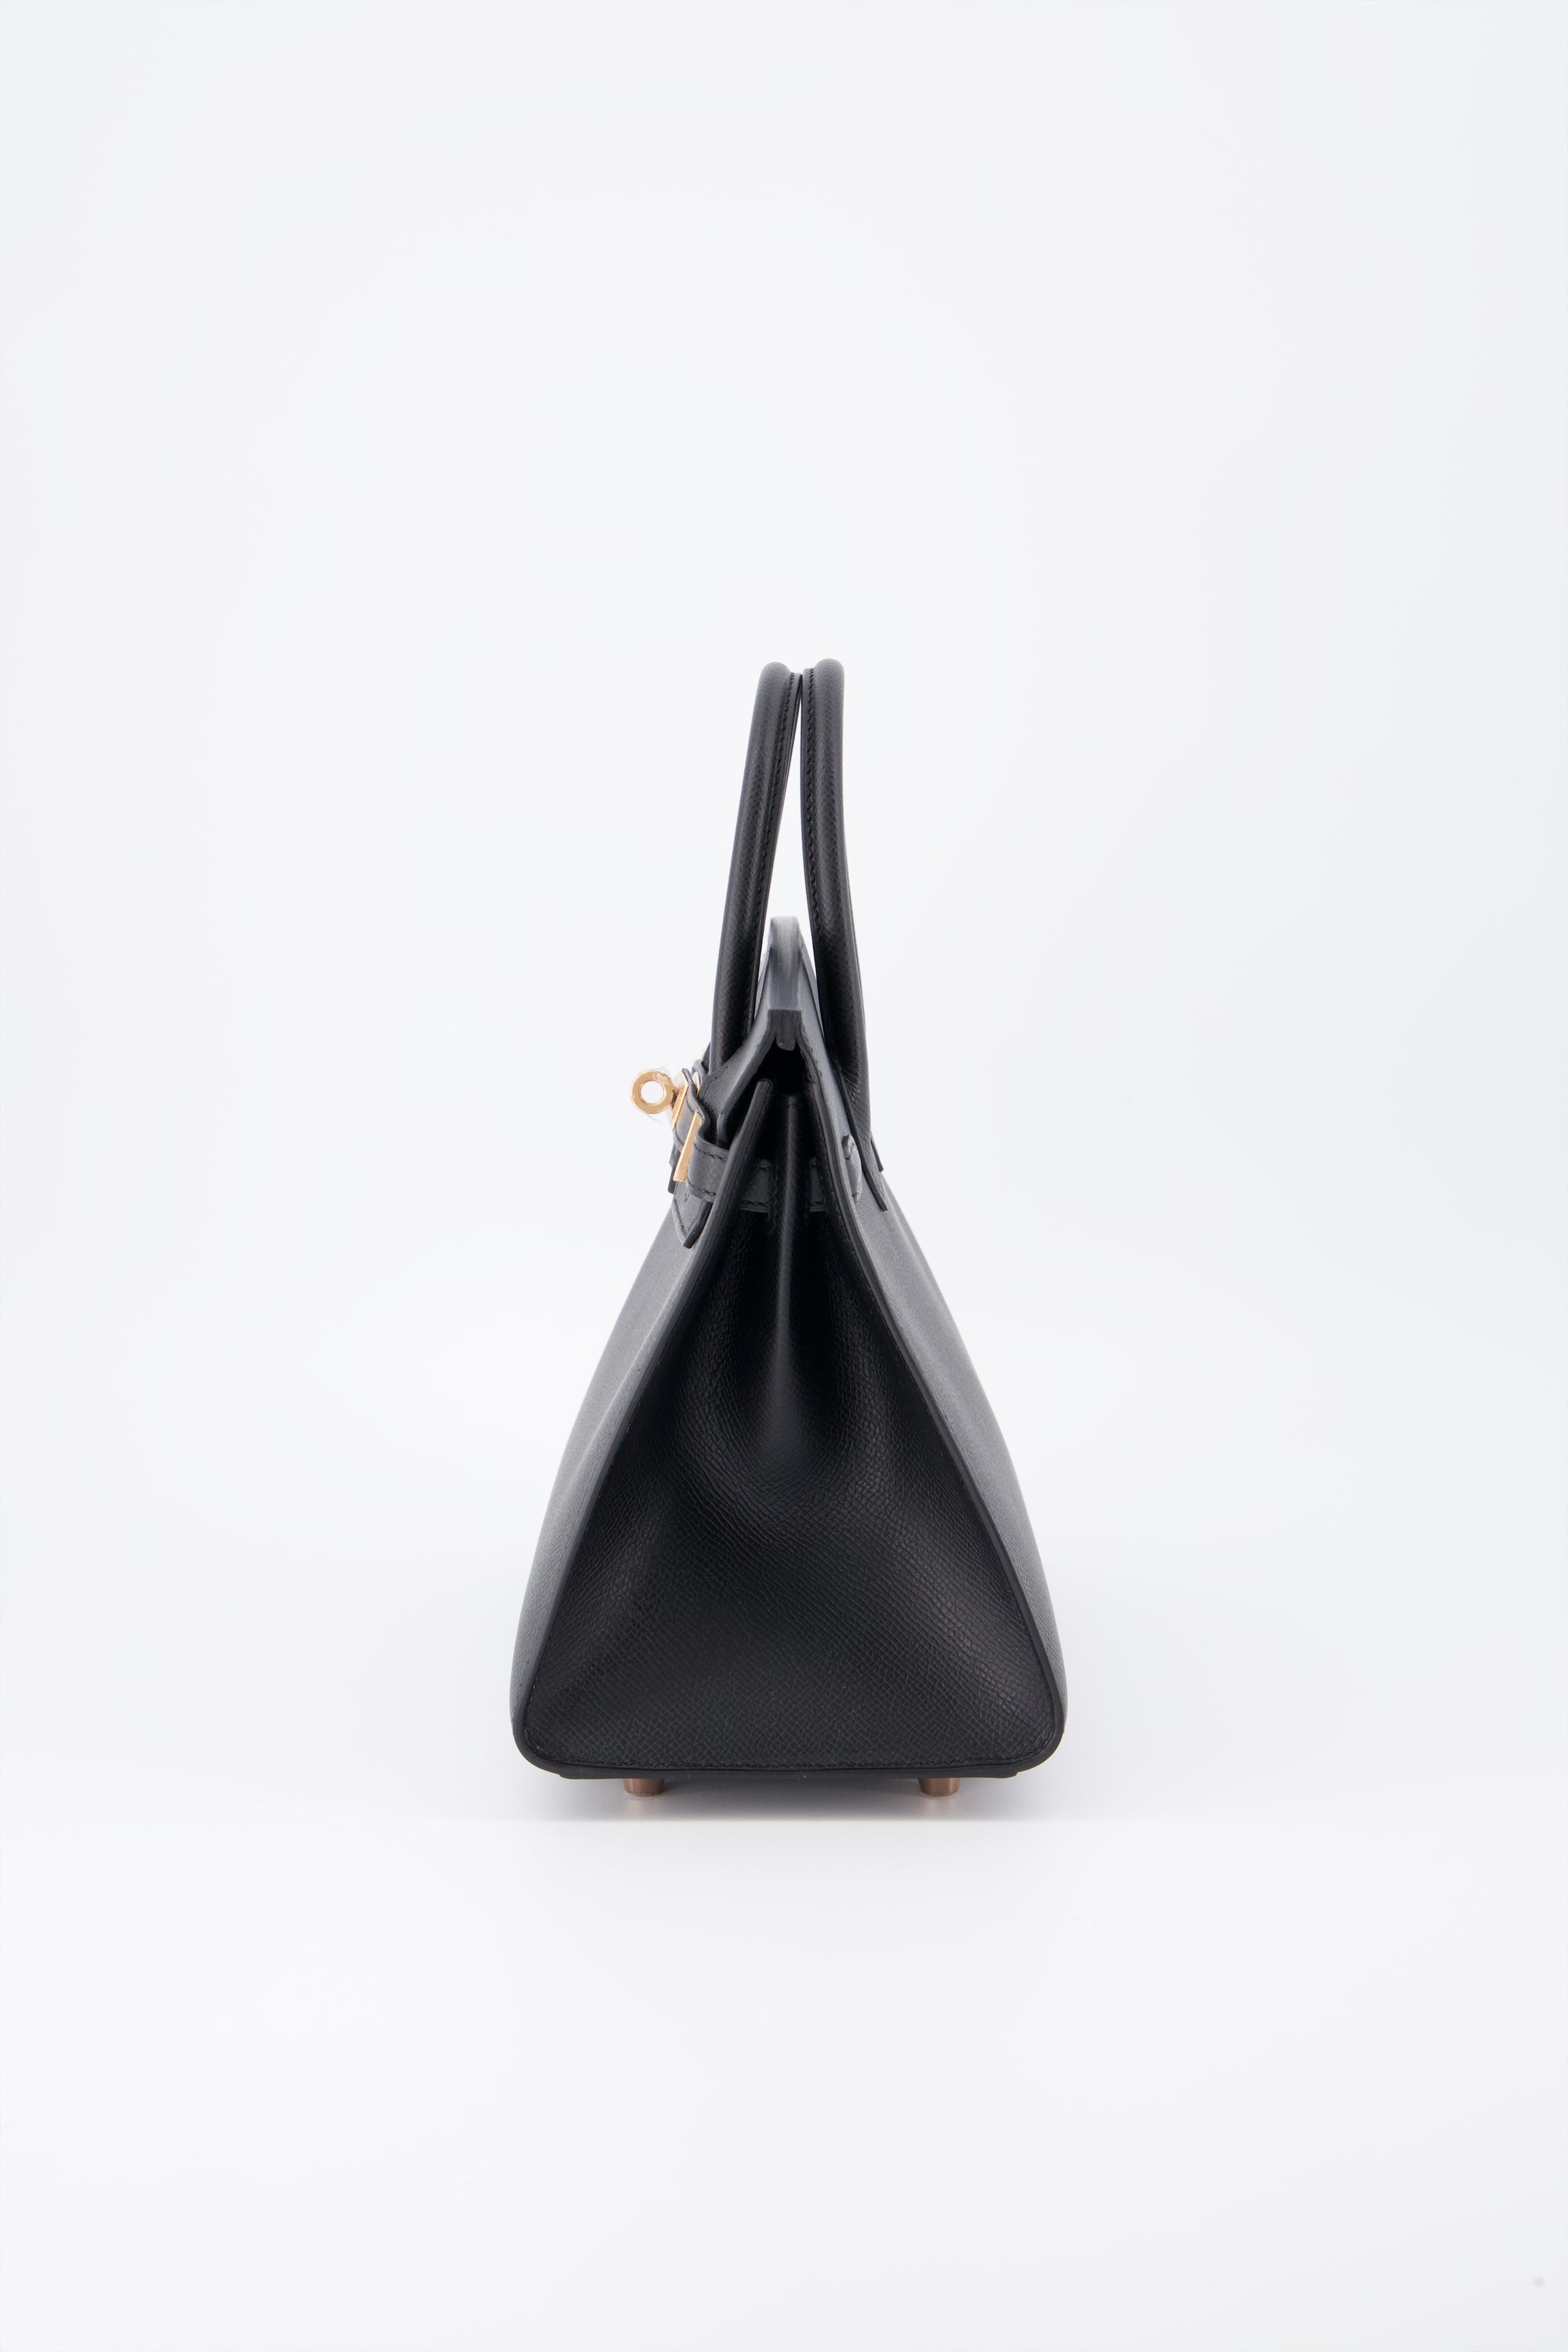 *Rare* Hermes Birkin 25 Black Sellier Handbag Epsom Leather With Gold Hardware. Investment Piece.